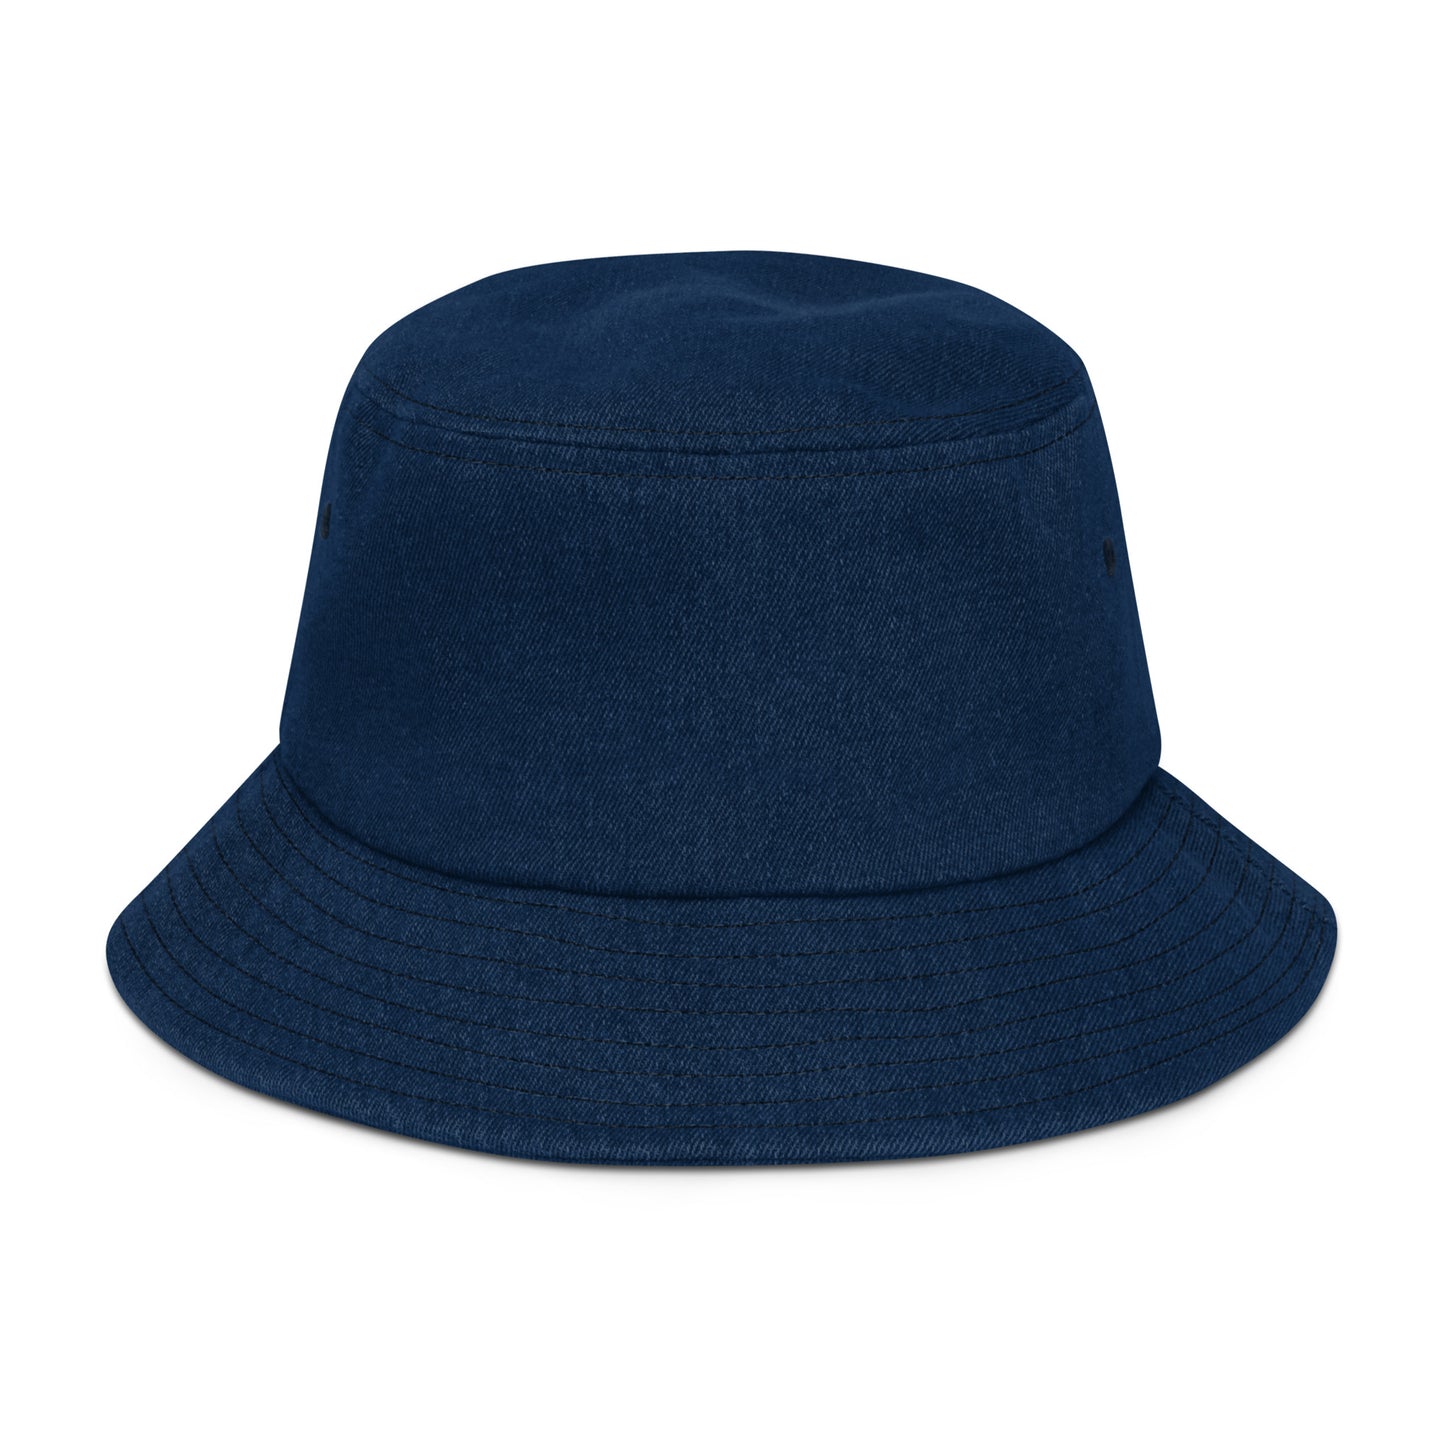 Denim ILBM Bucket Hat